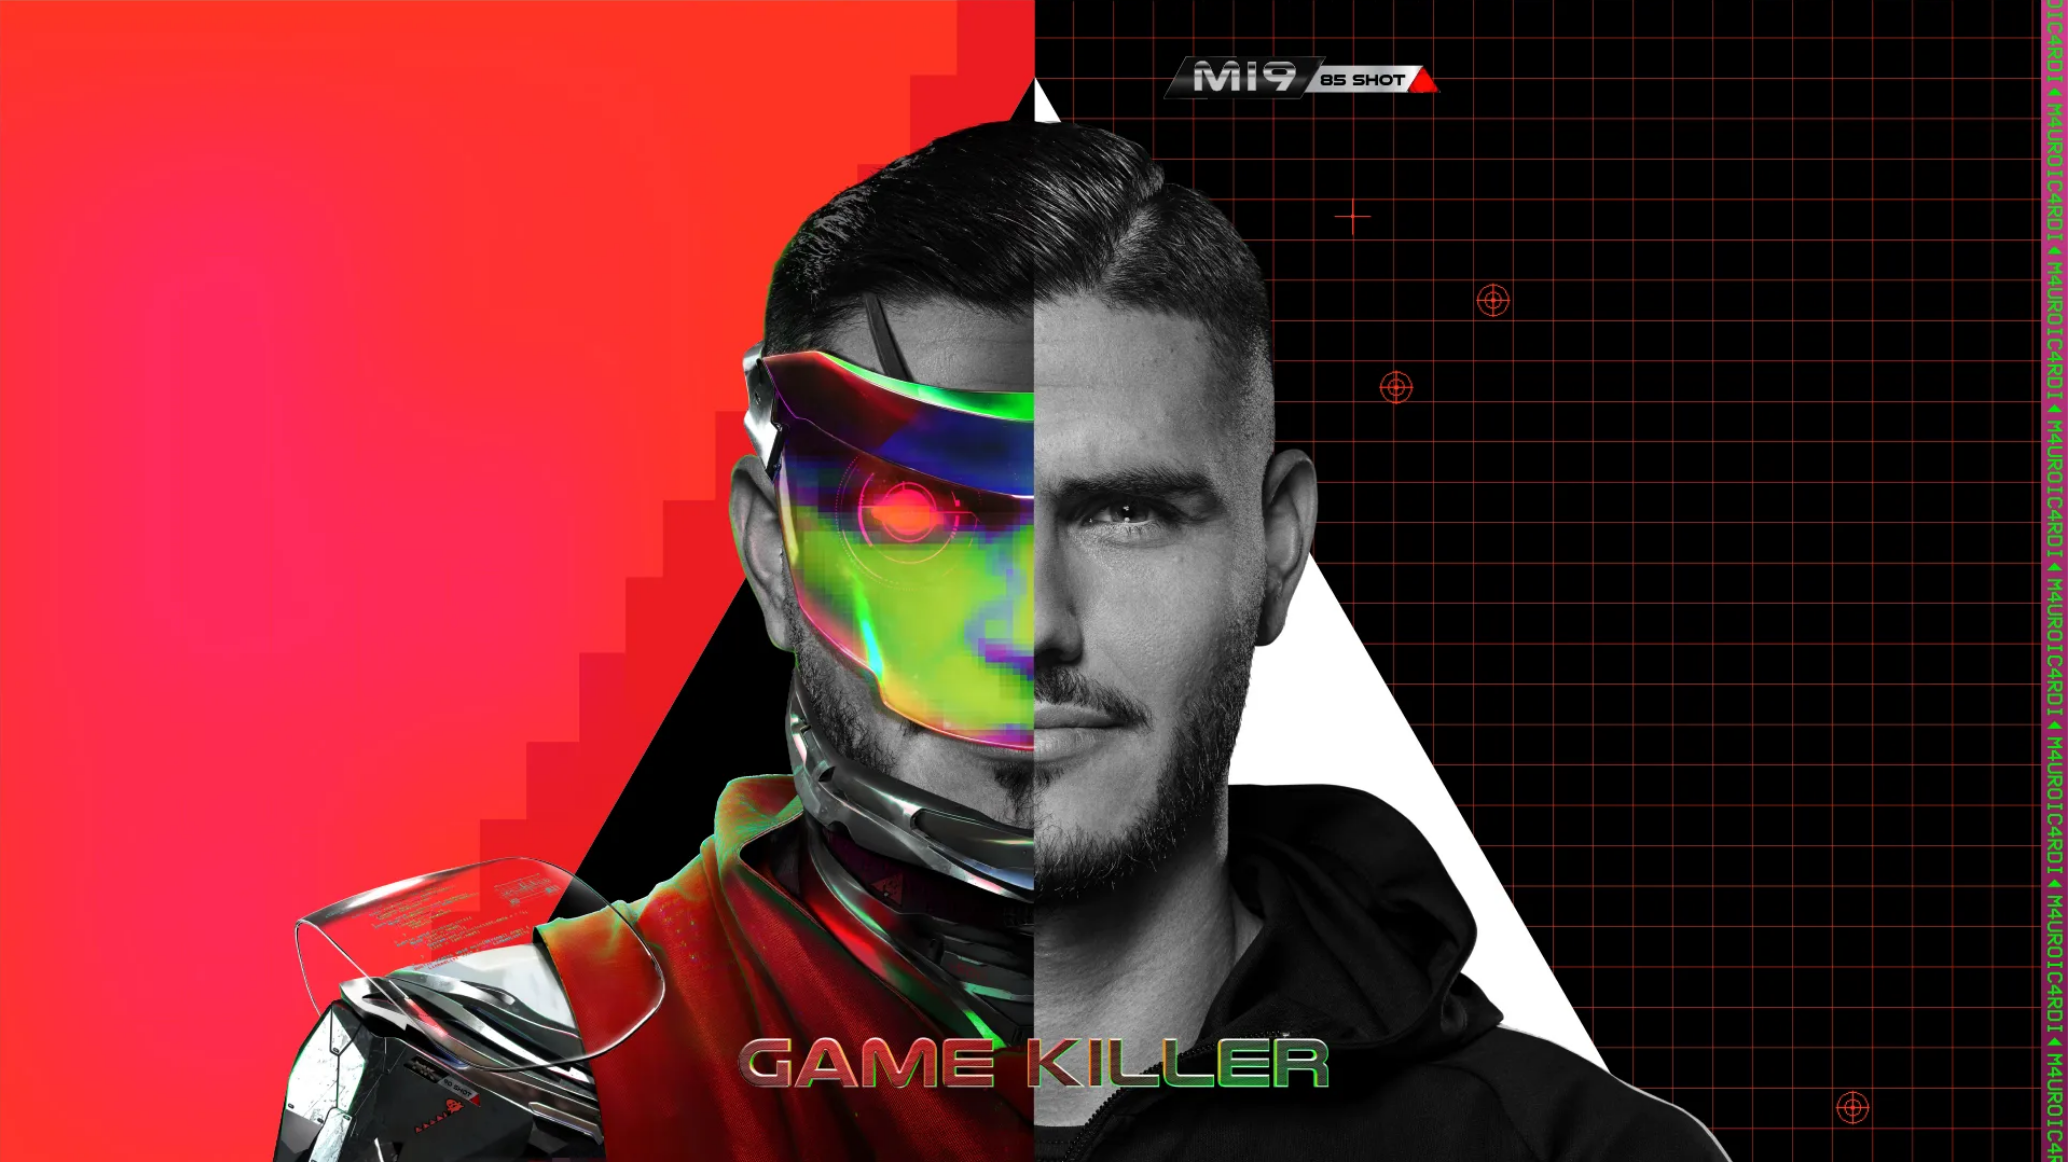 Killer com. Nikke игра. Nike game. Nike Killer Wave.